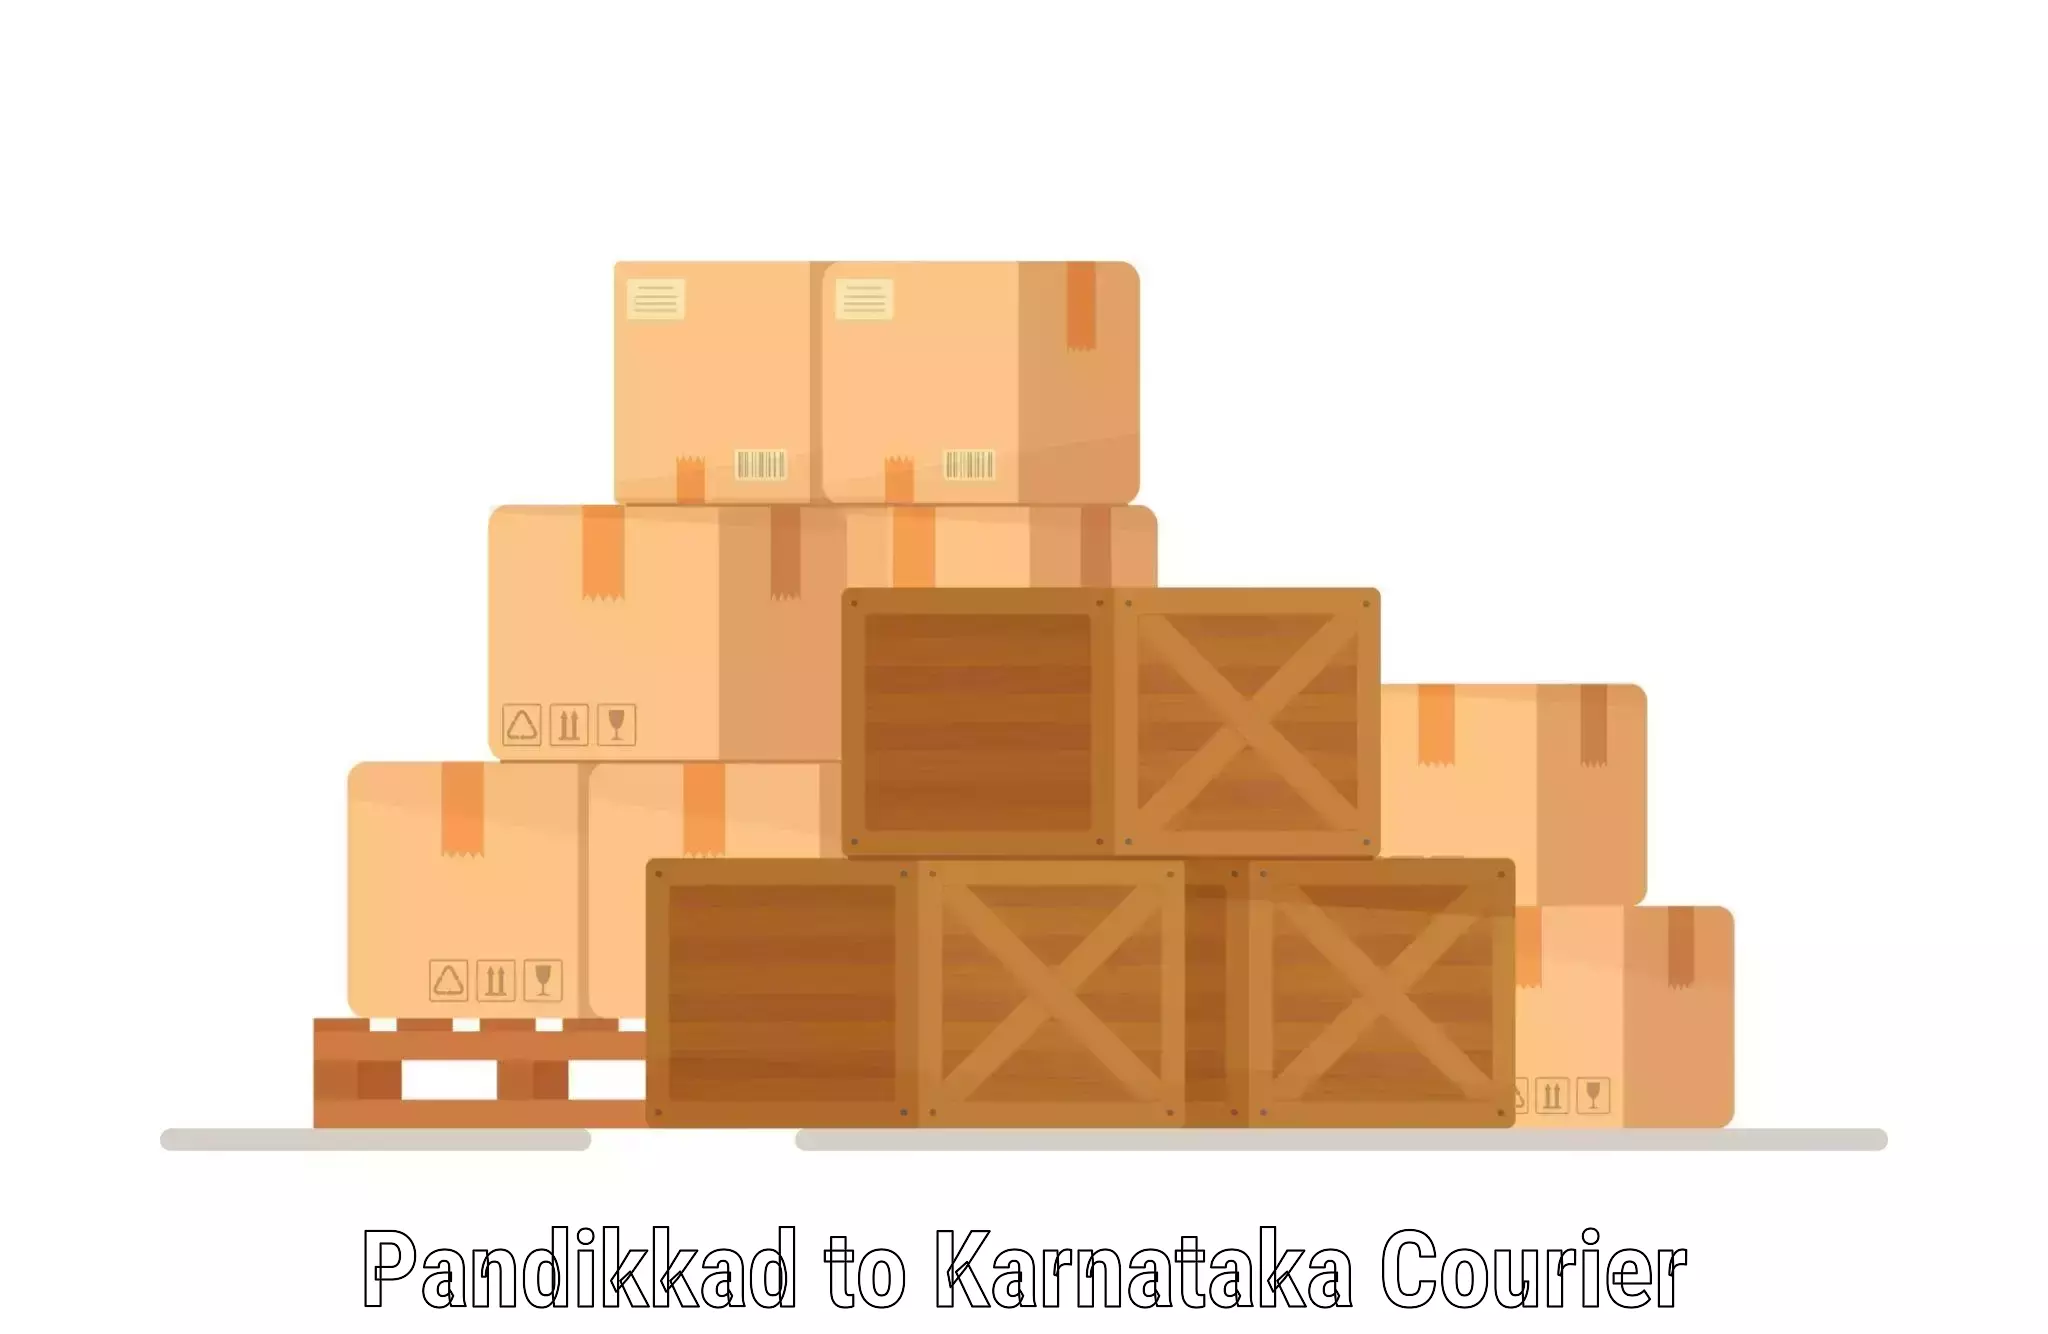 Logistics efficiency in Pandikkad to Ankola